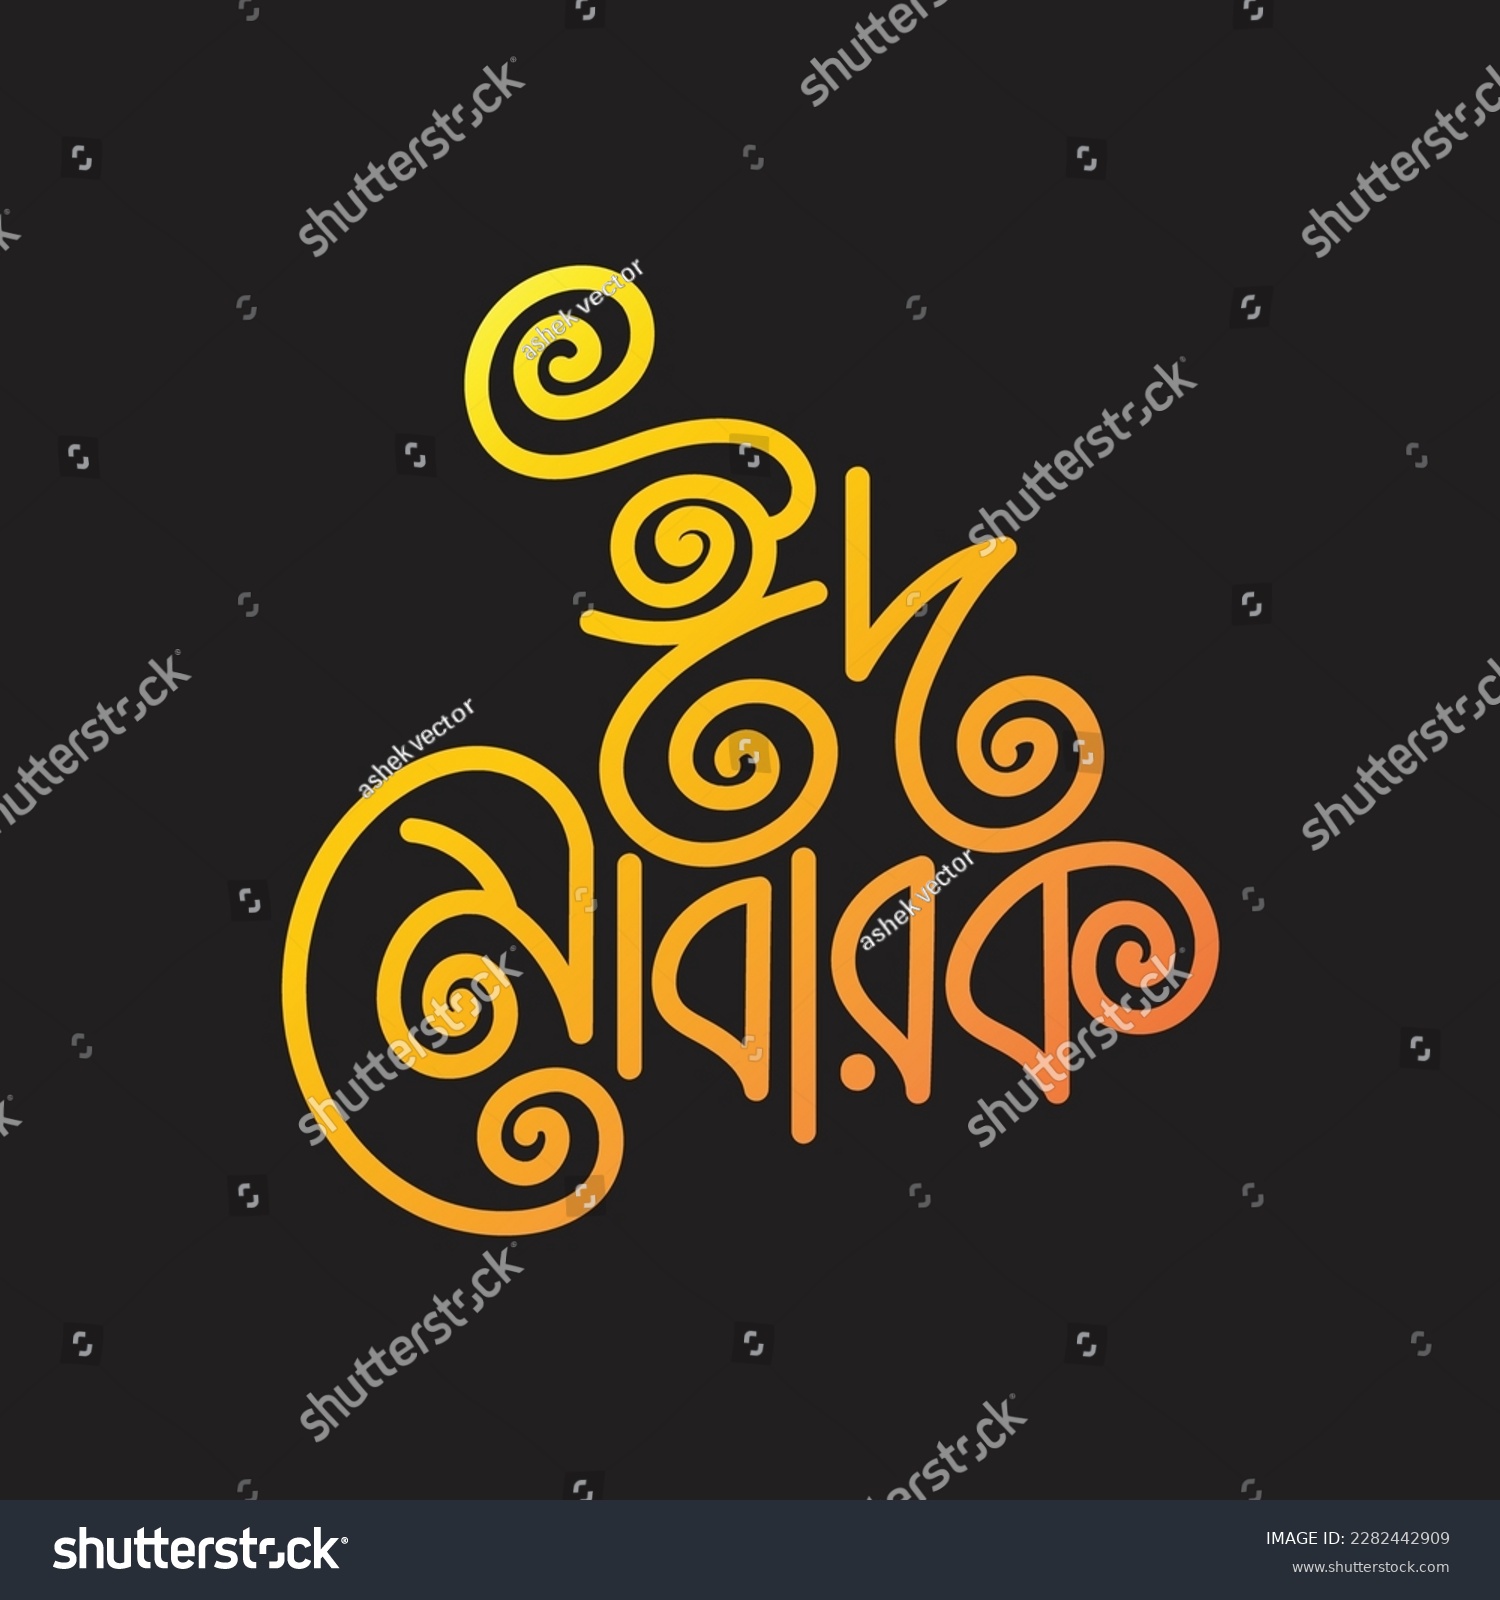 SVG of Eid Mubarak Bangla typography. Eid ul Adha vector illustration. Religious holiday celebrated by Muslims worldwide. 
Eid Mubarak greeting card lettering design. Arabic style Bengali calligraphy. svg